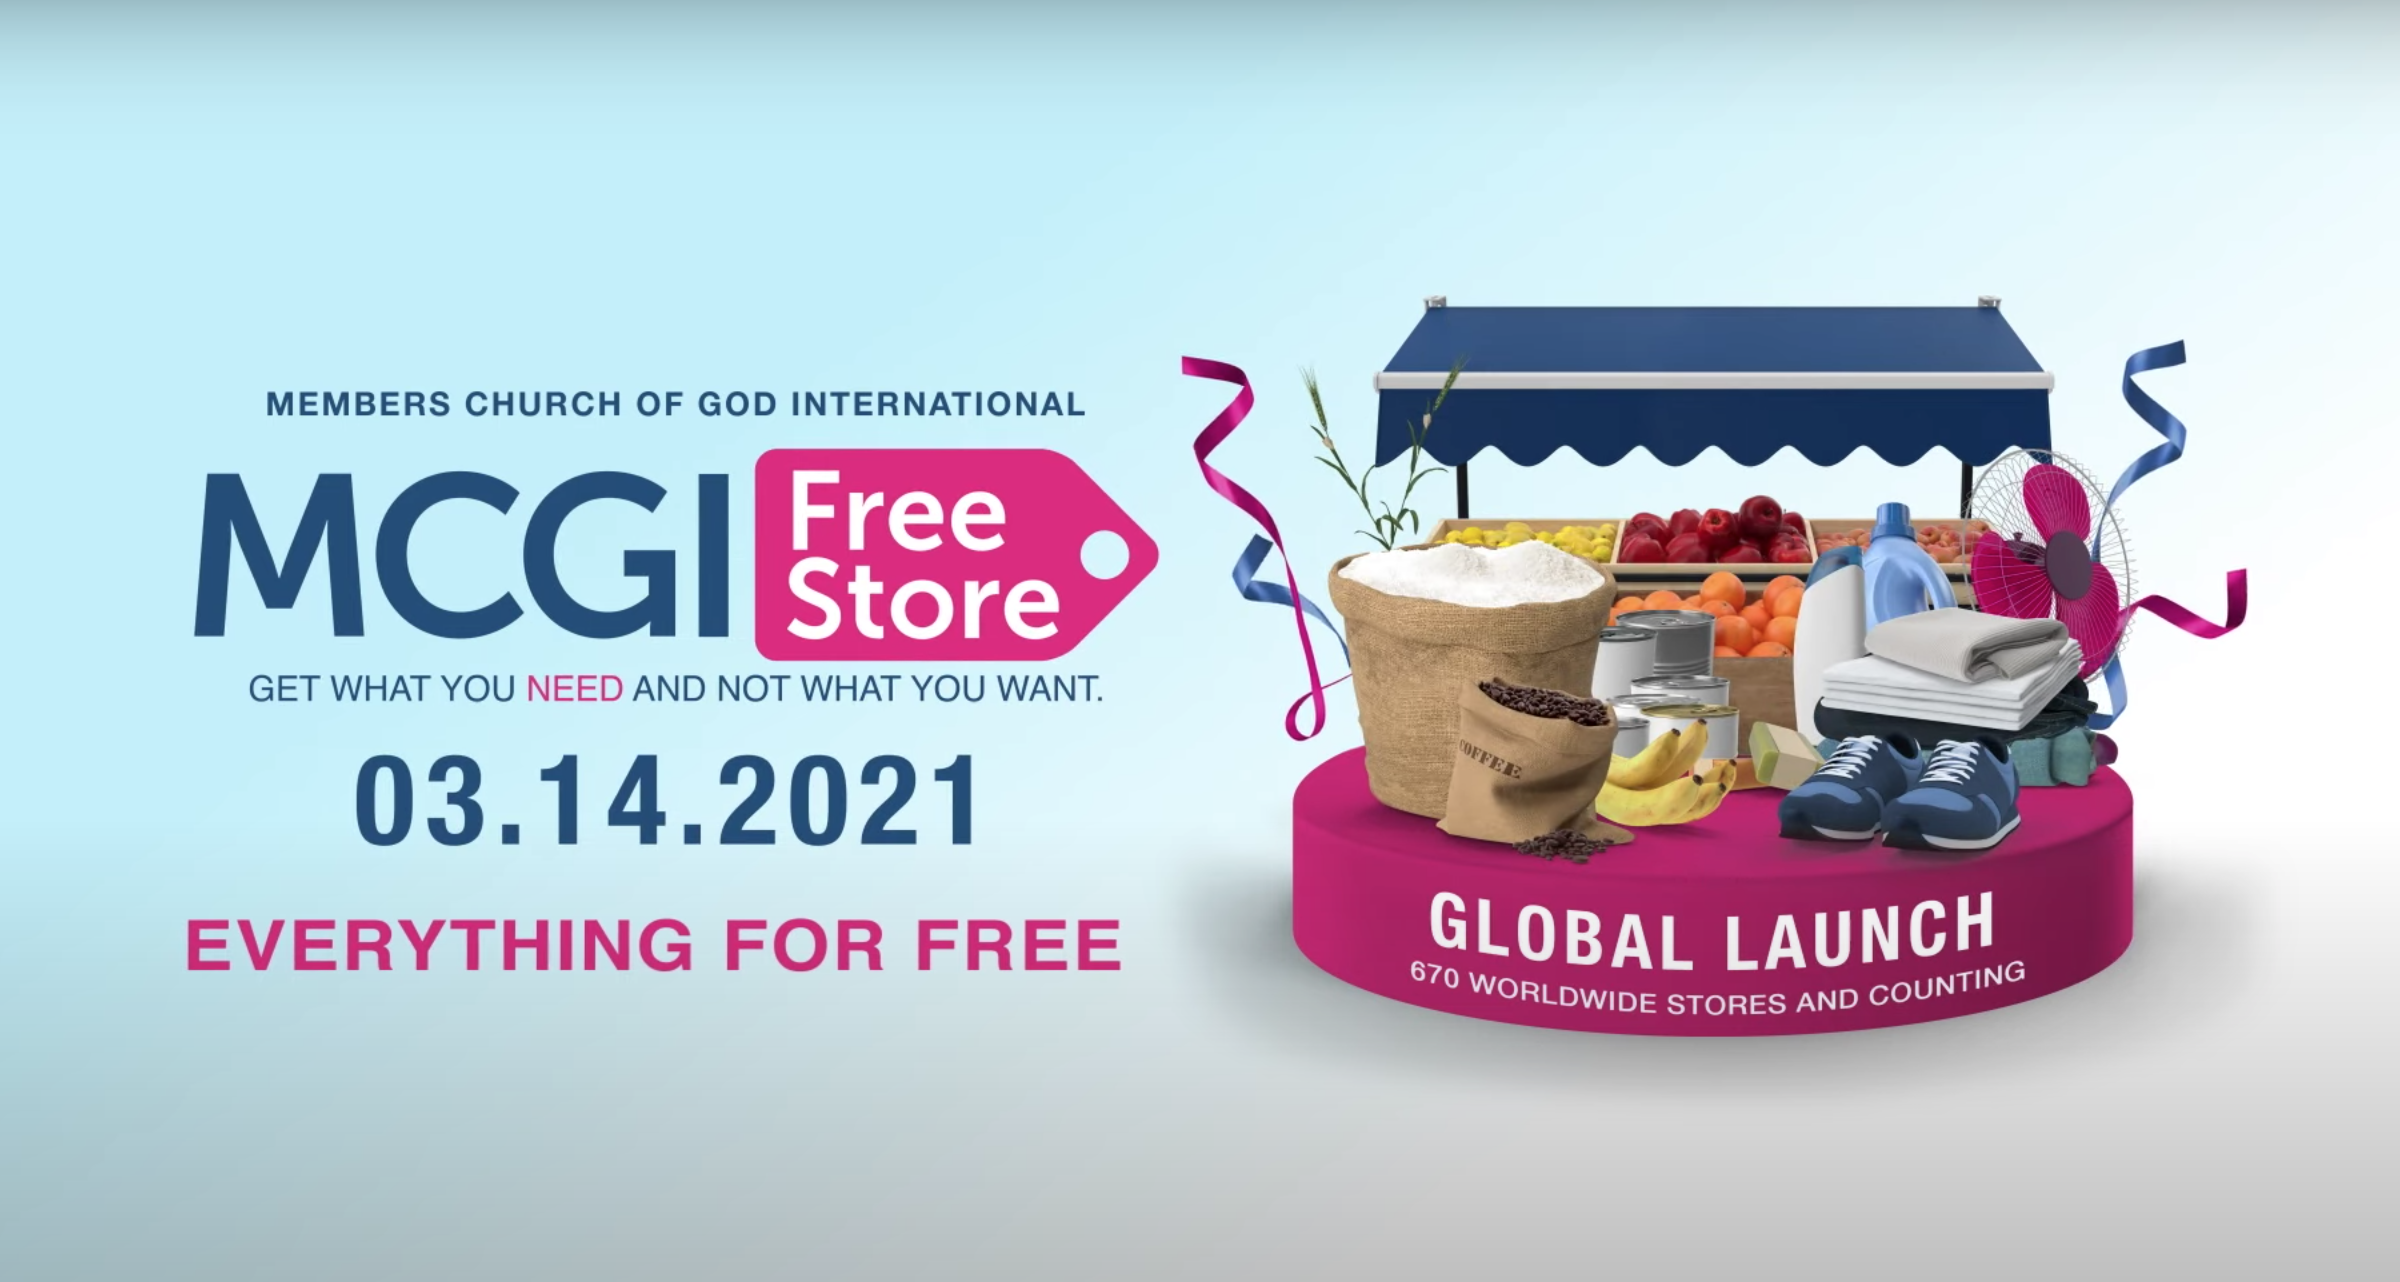 MCGI Free Store